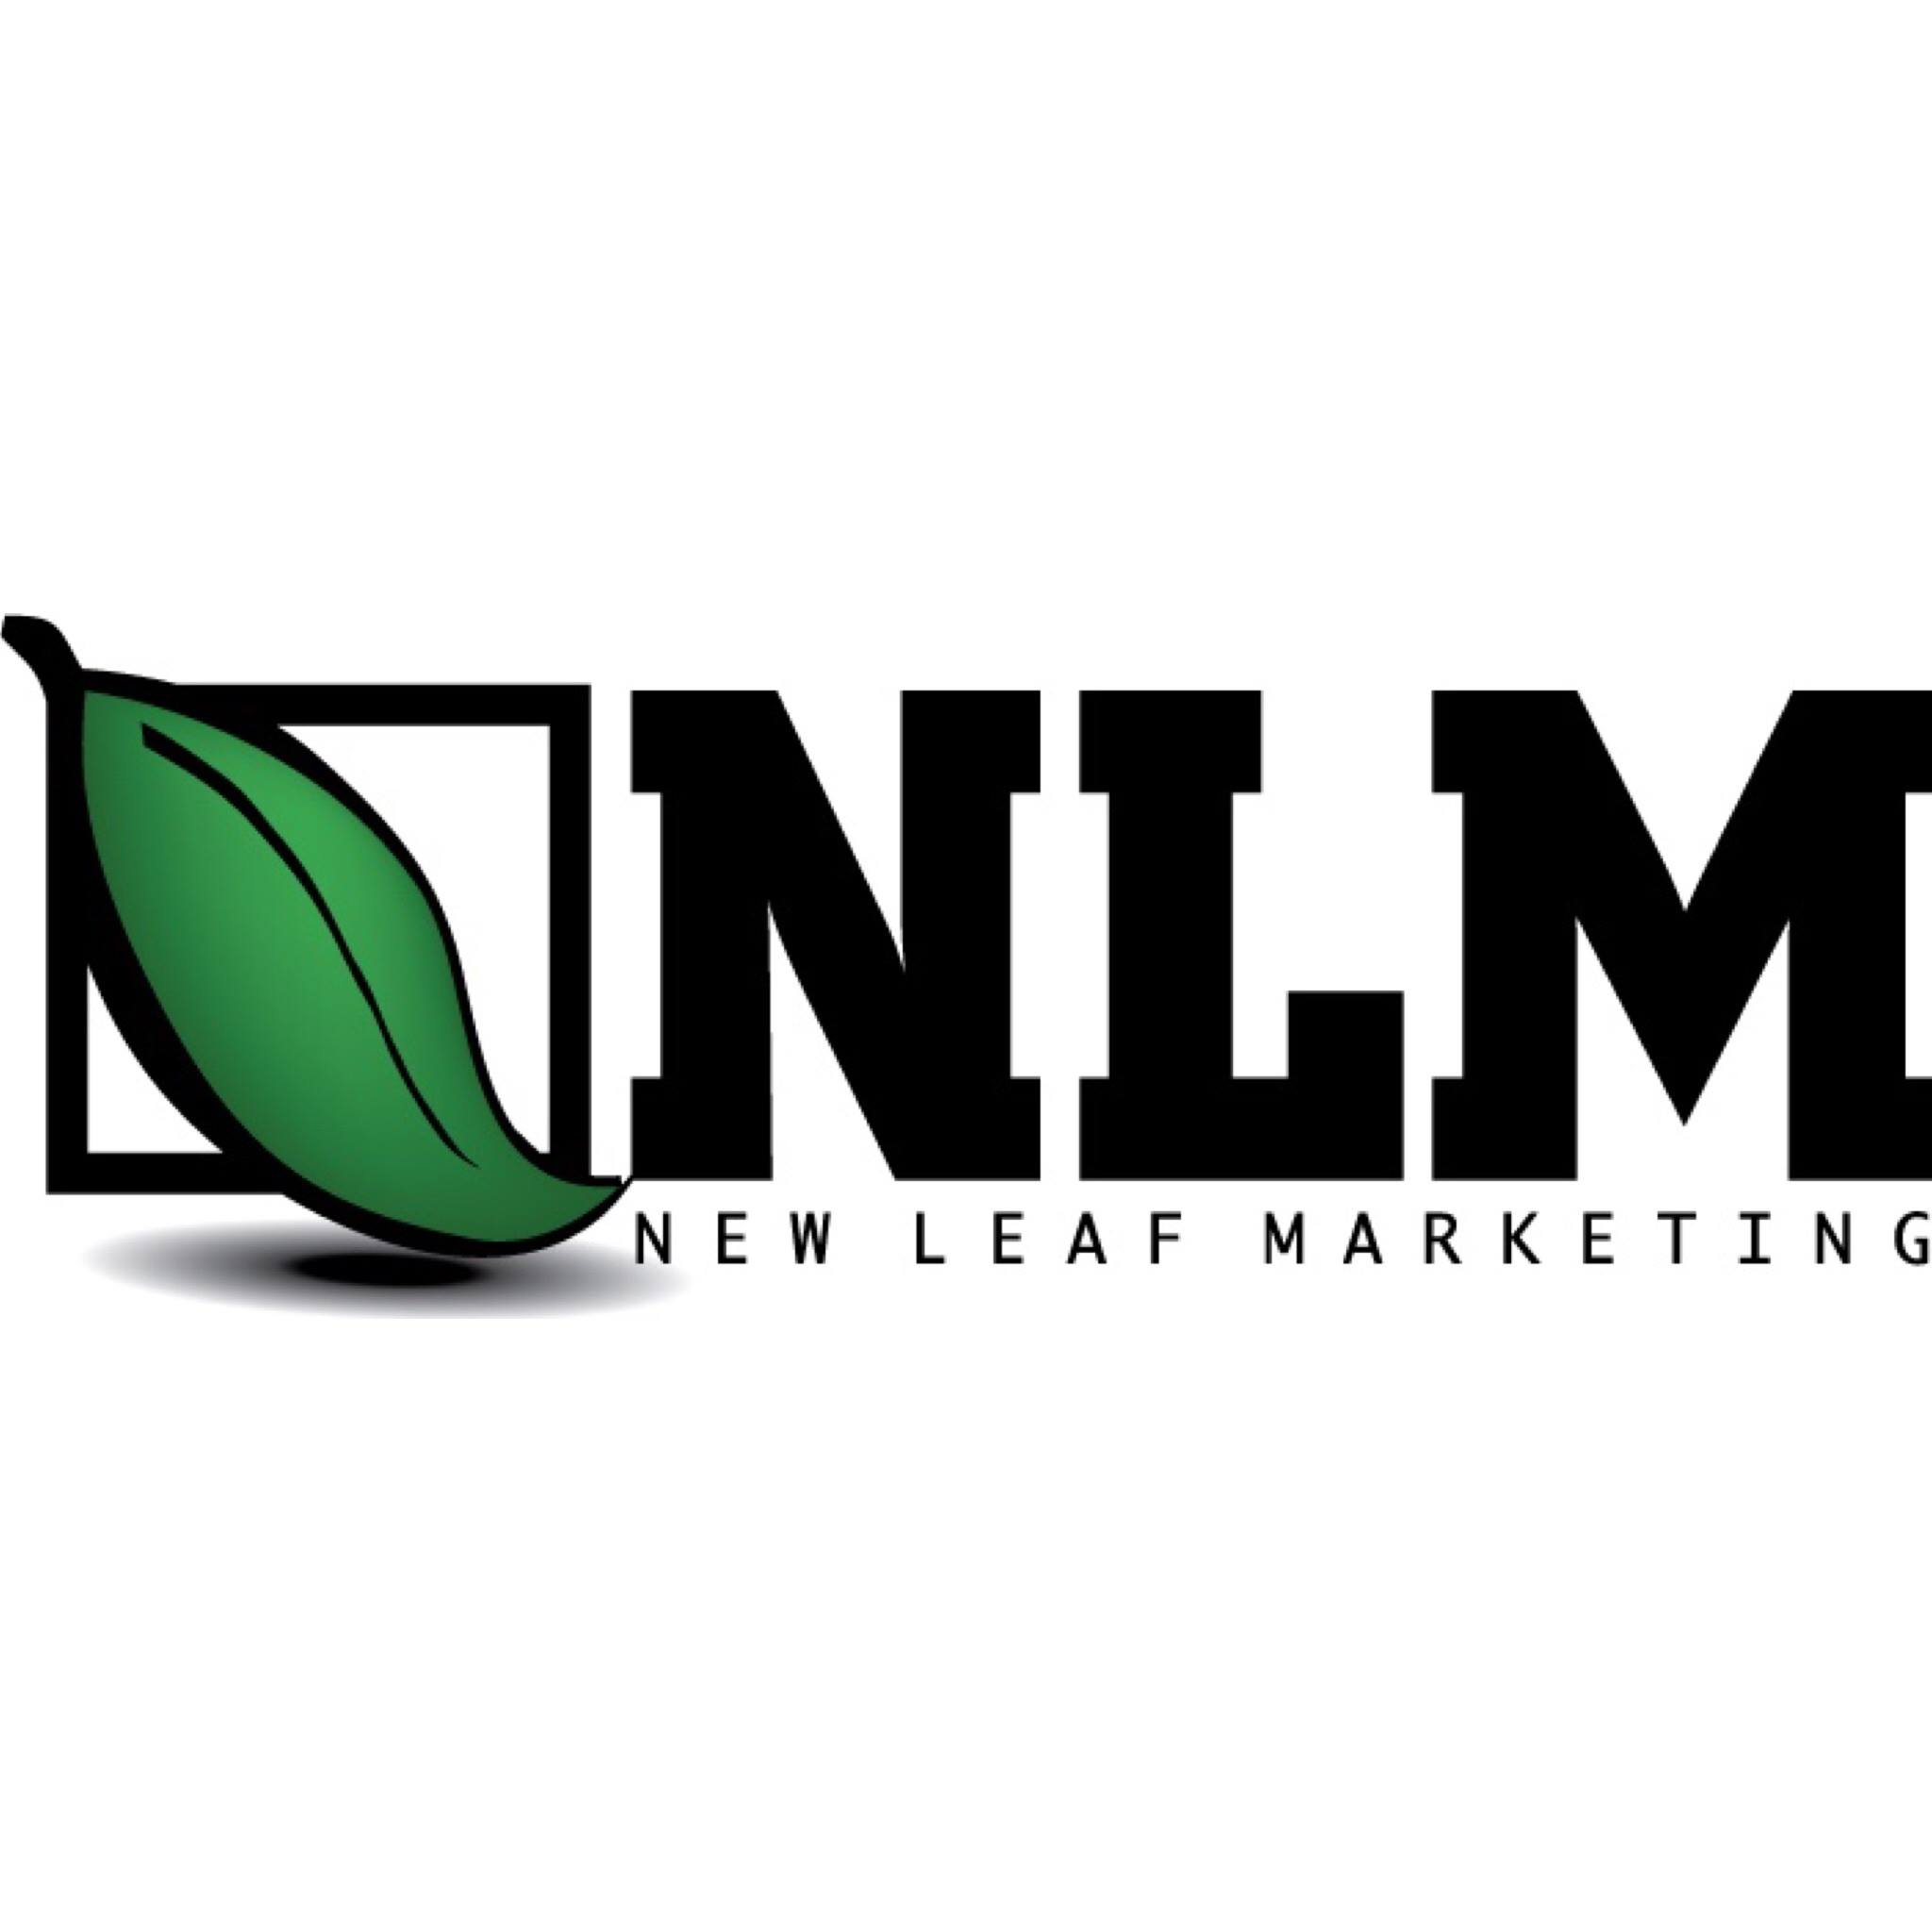 Company logo of New Leaf Marketing